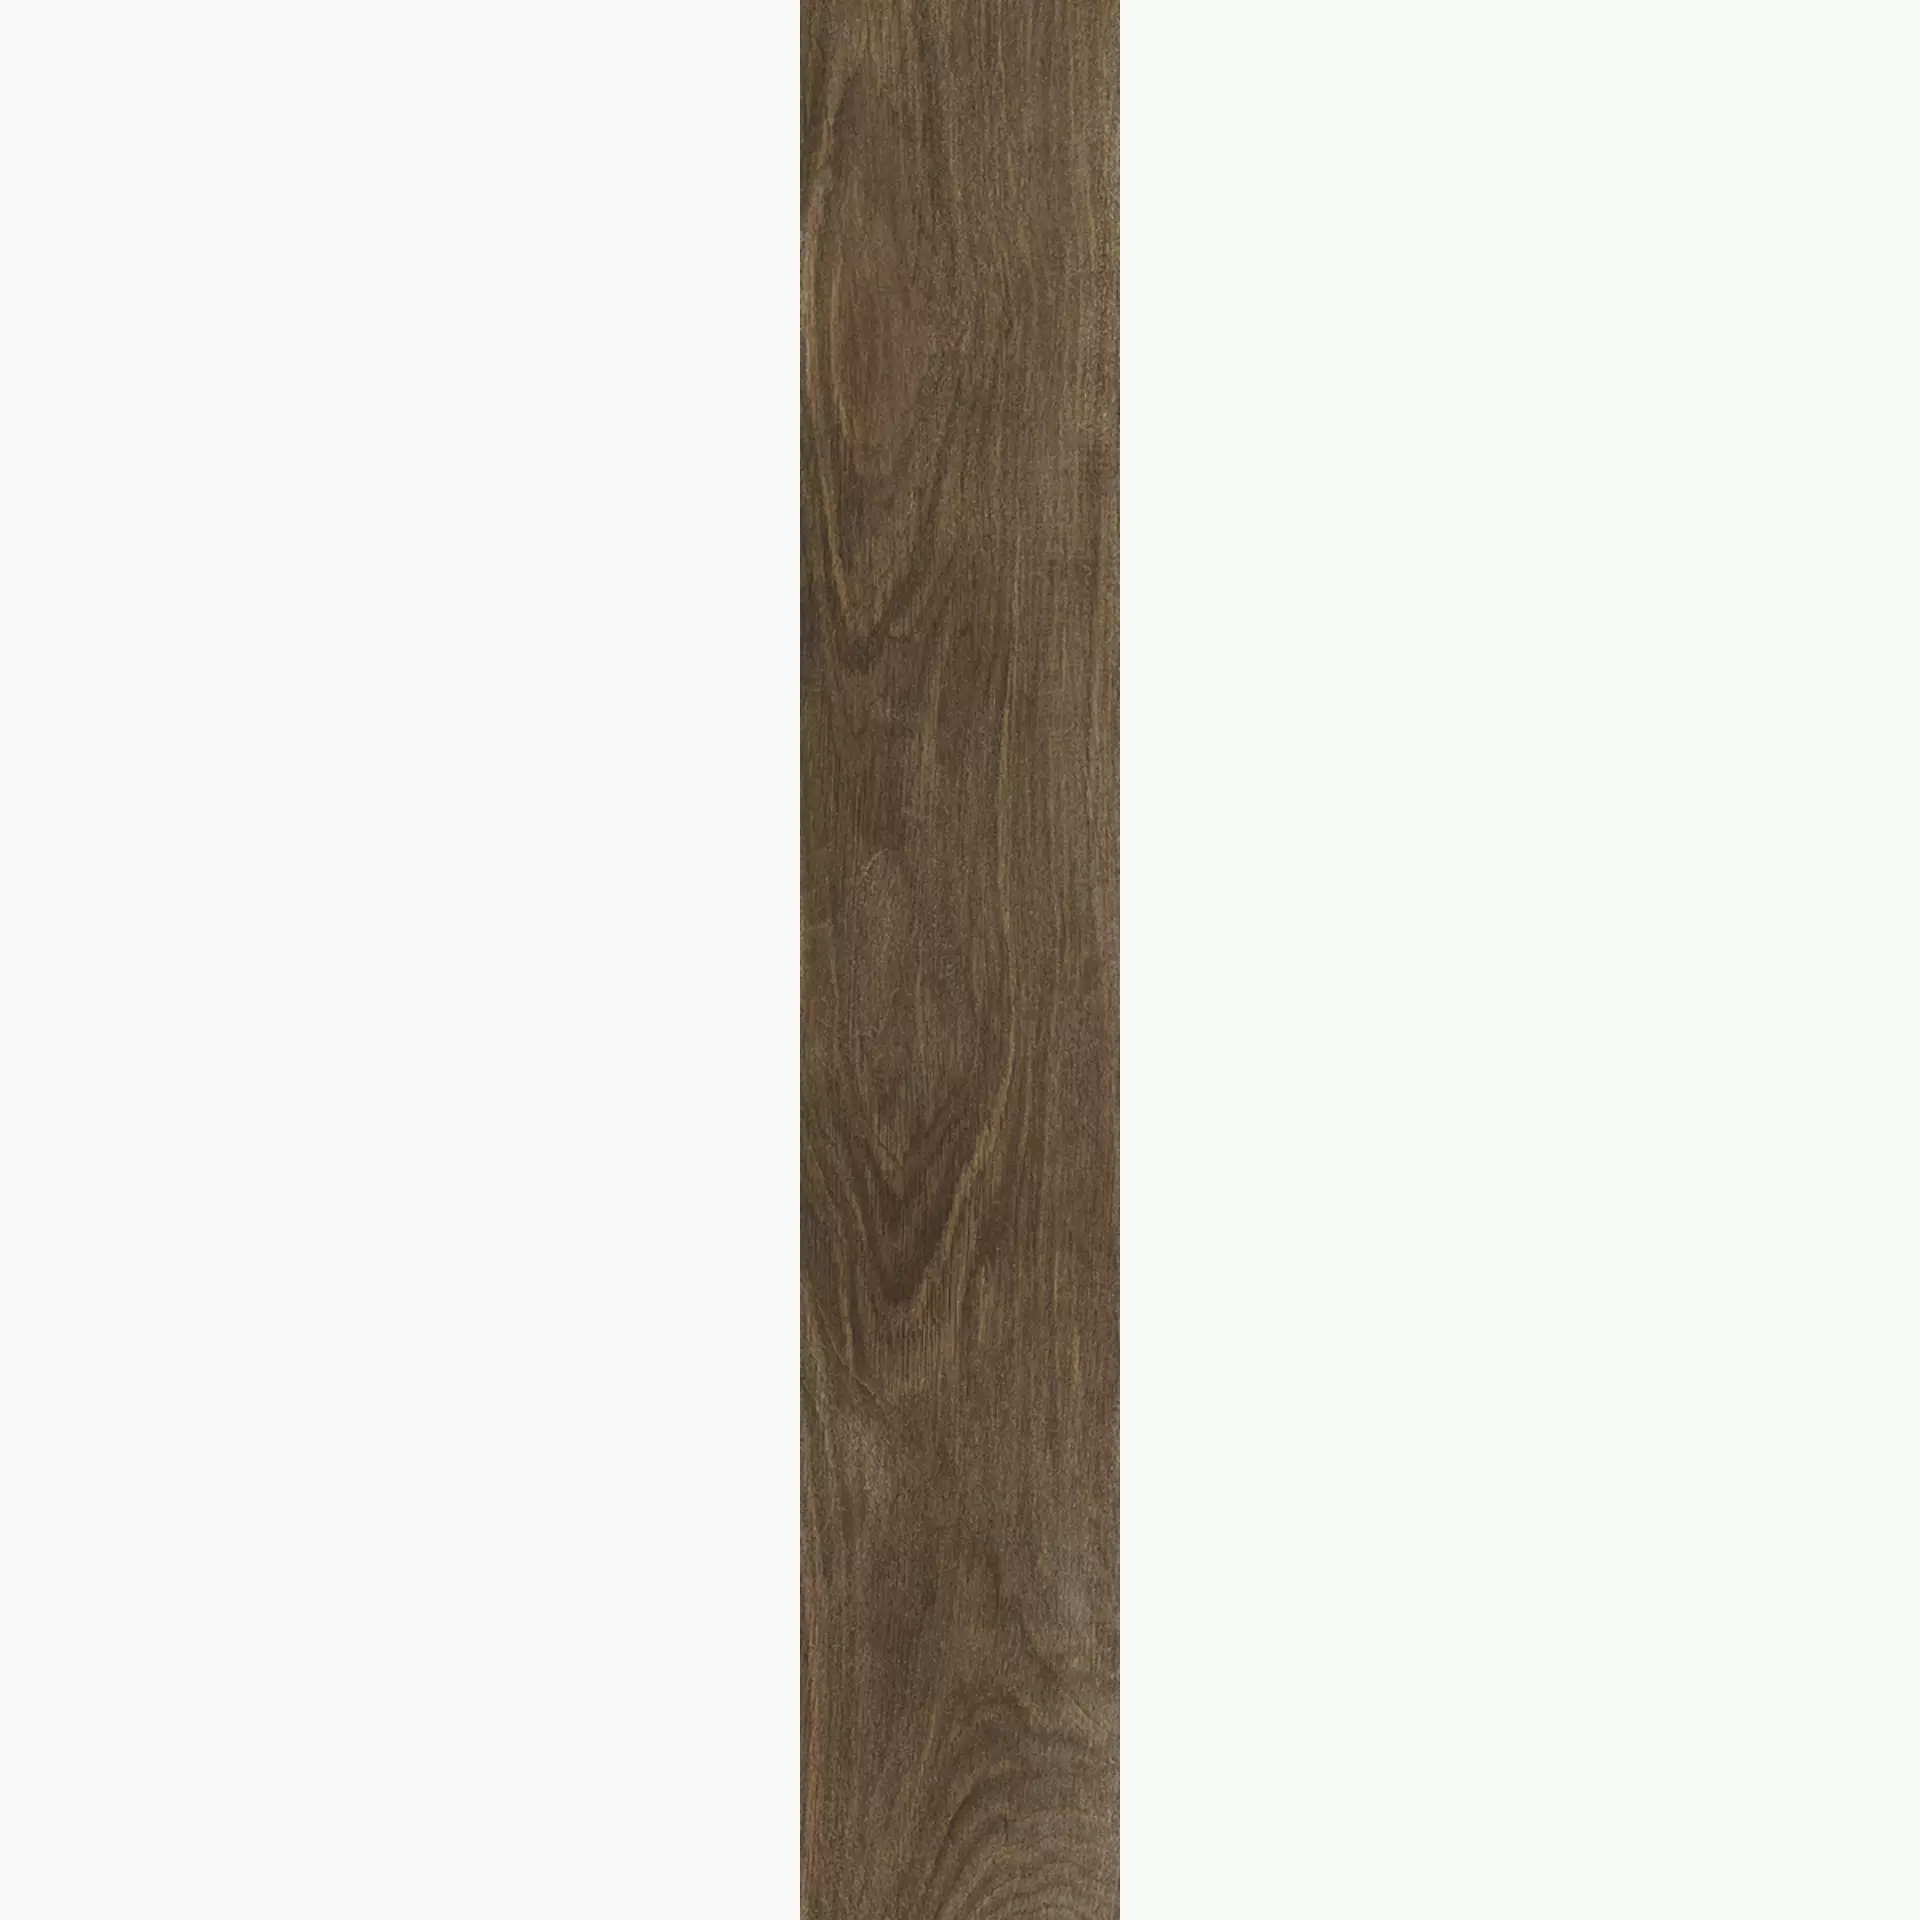 Rondine Greenwood Bruno Naturale J86332 7,5x45cm 8,5mm